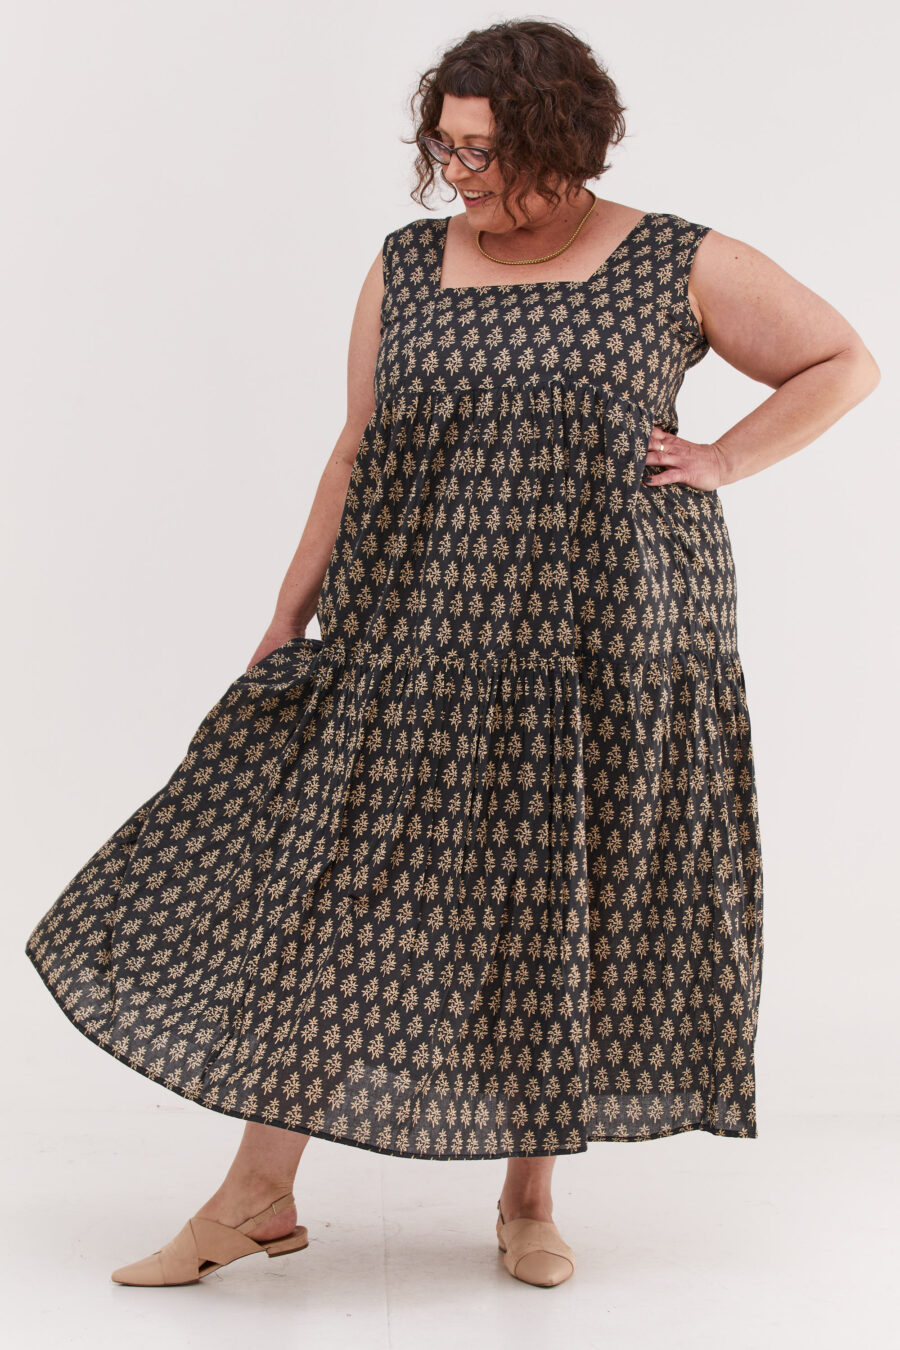 Lizi dress | Uniquely designed dress – Tokio print, black dress with cream colored oriental print. by comfort zone boutique.